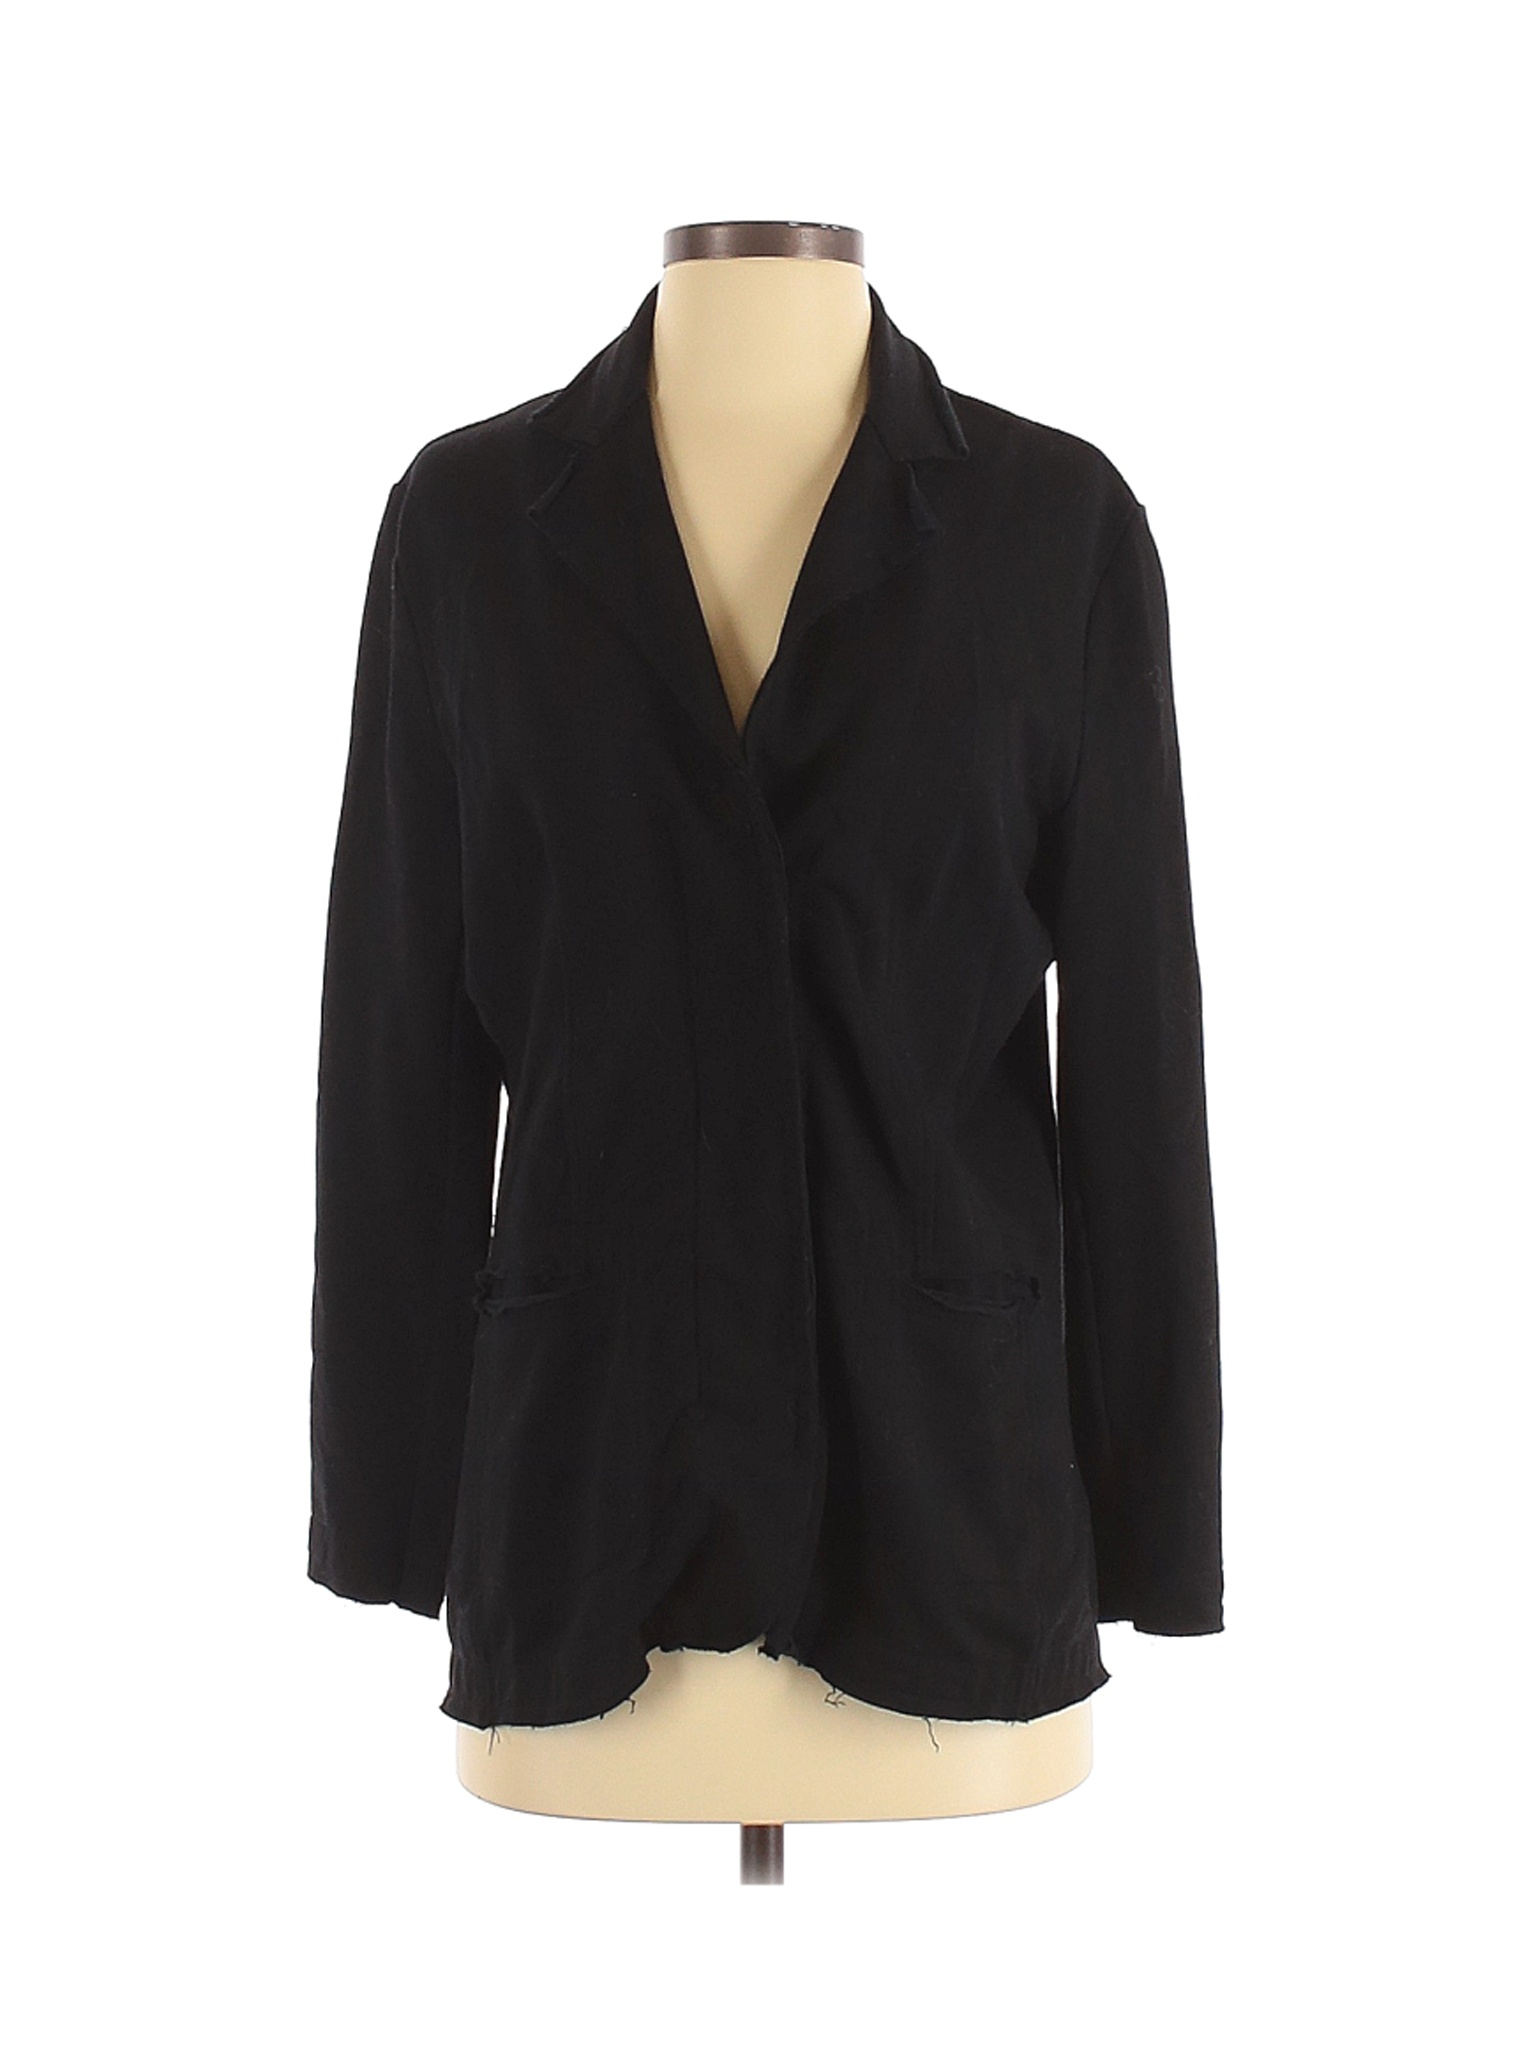 Bloomingdale's Women Black Coat S Petites | eBay